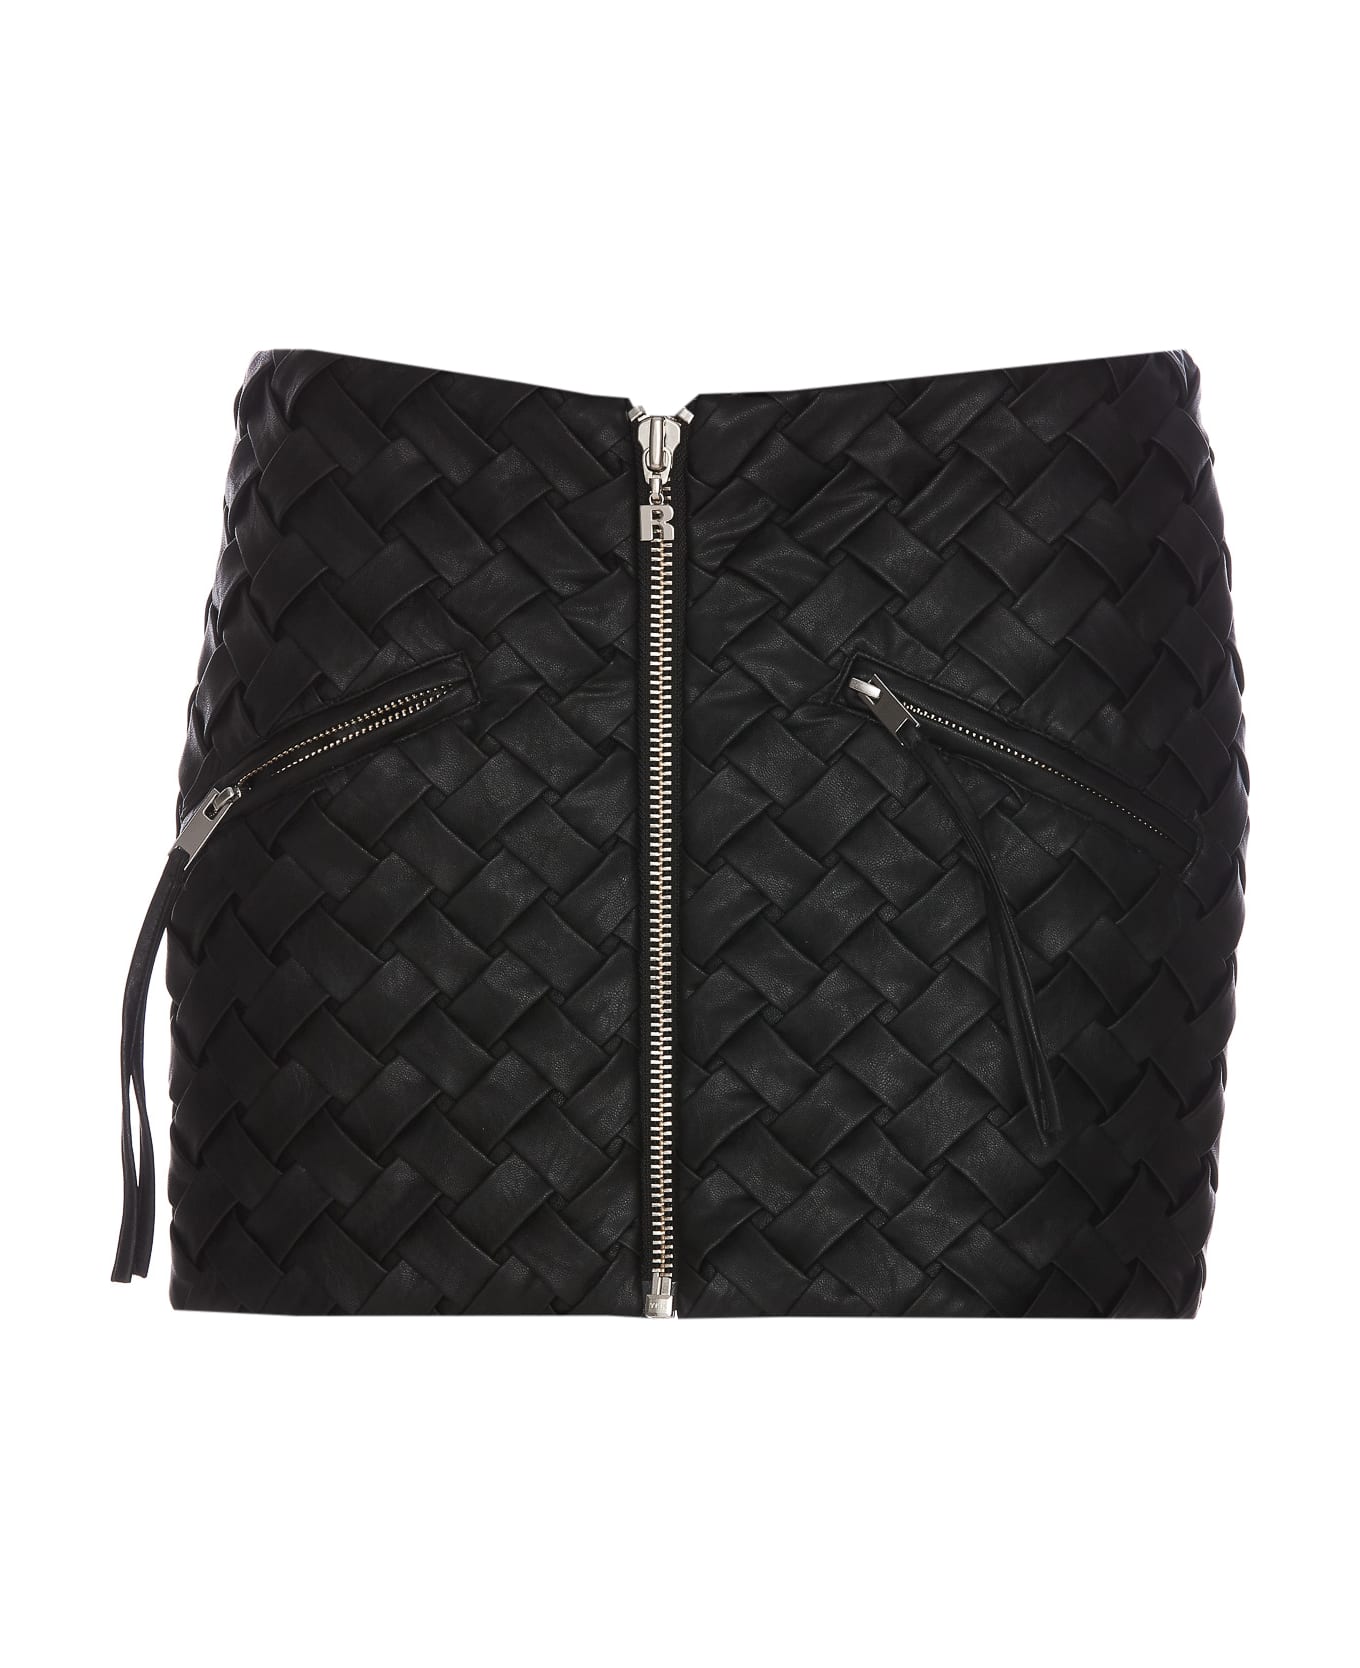 Rotate by Birger Christensen Mini Skirt - Black スカート